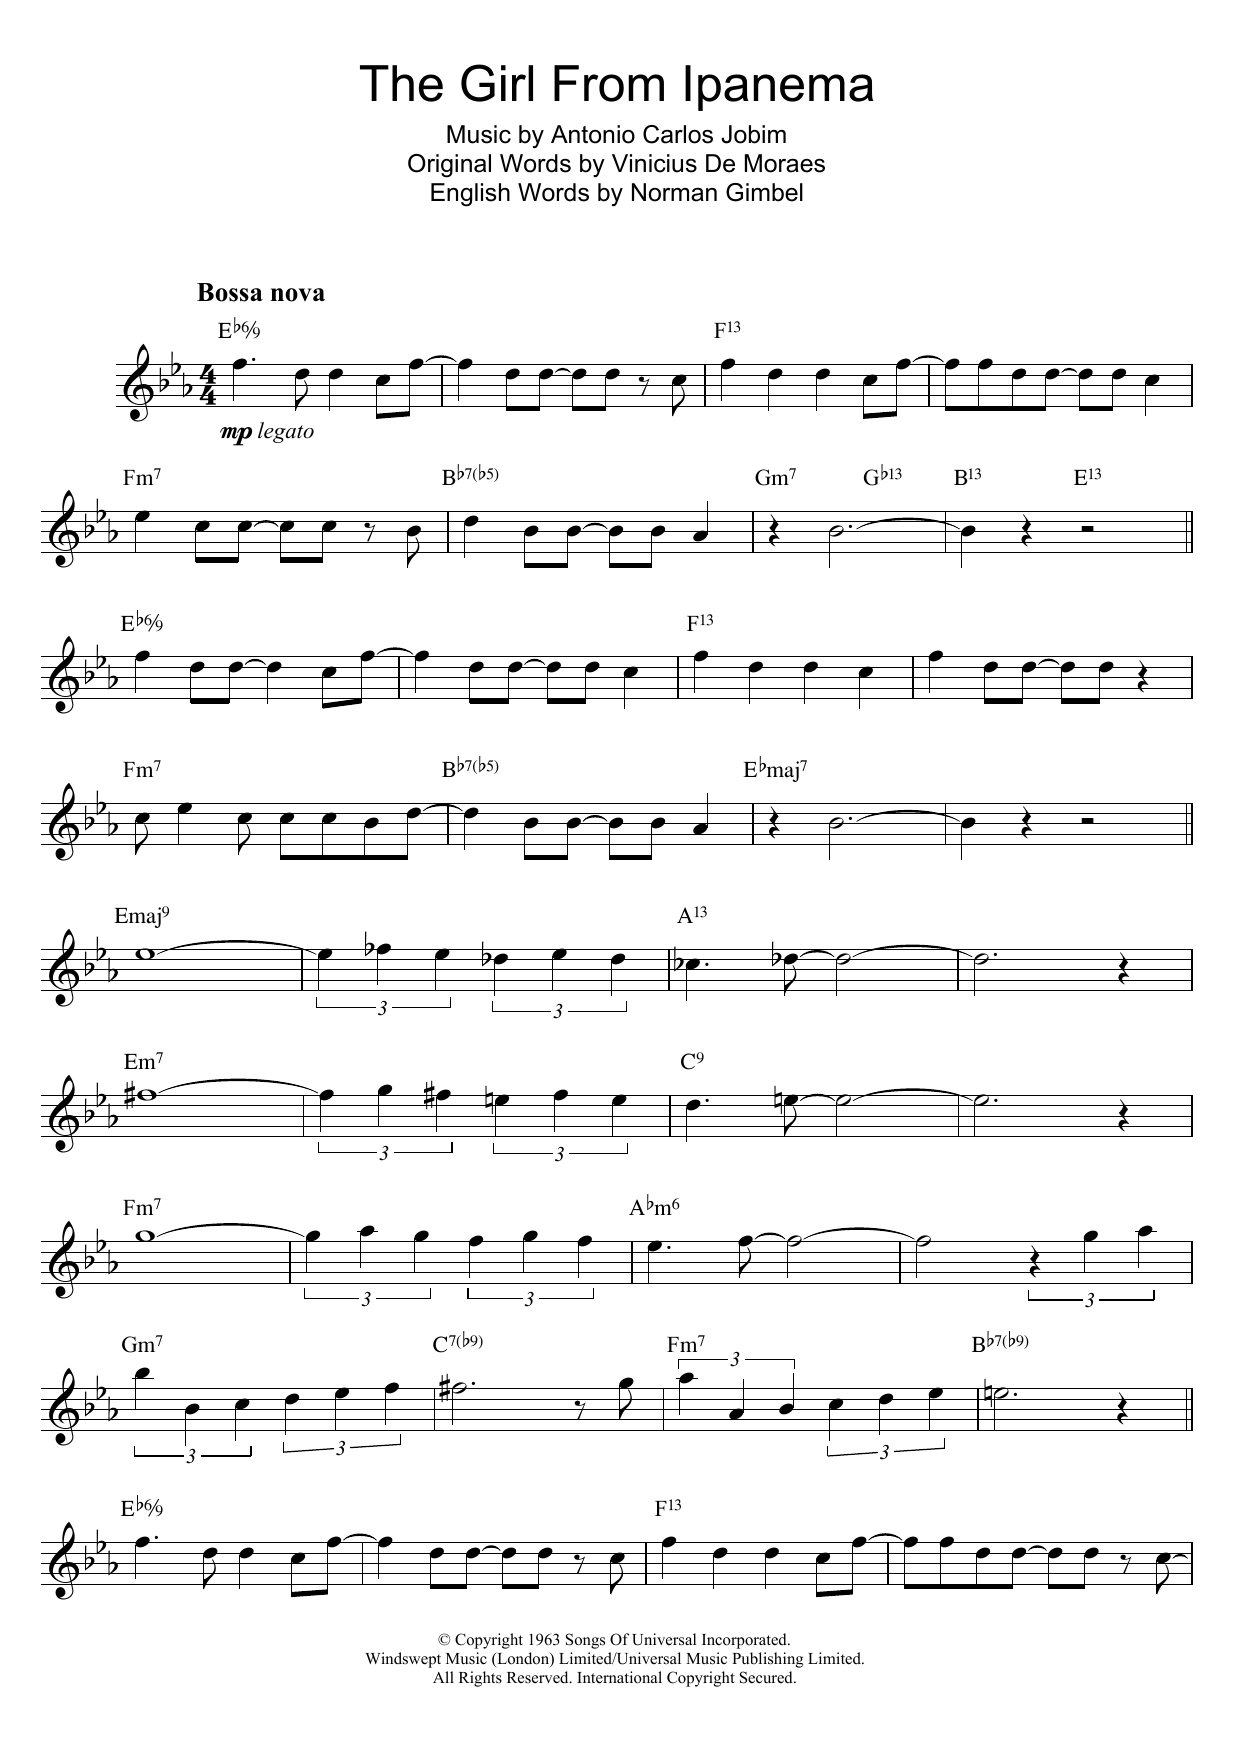 Download Antonio Carlos Jobim The Girl From Ipanema (Garota De Ipanema) Sheet Music and learn how to play Trumpet PDF digital score in minutes